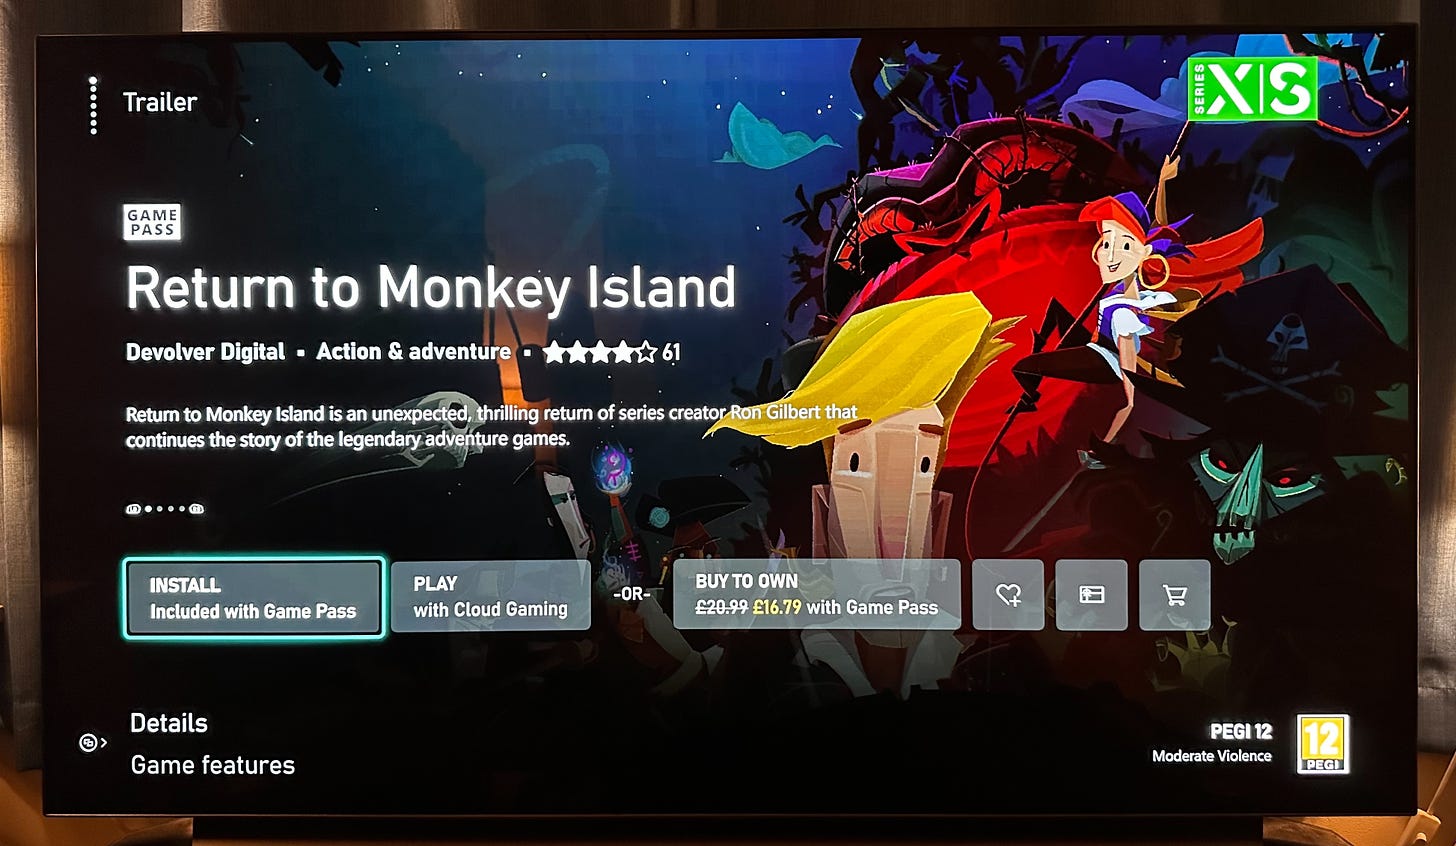 Xbox screen showing Return to Monkey Island